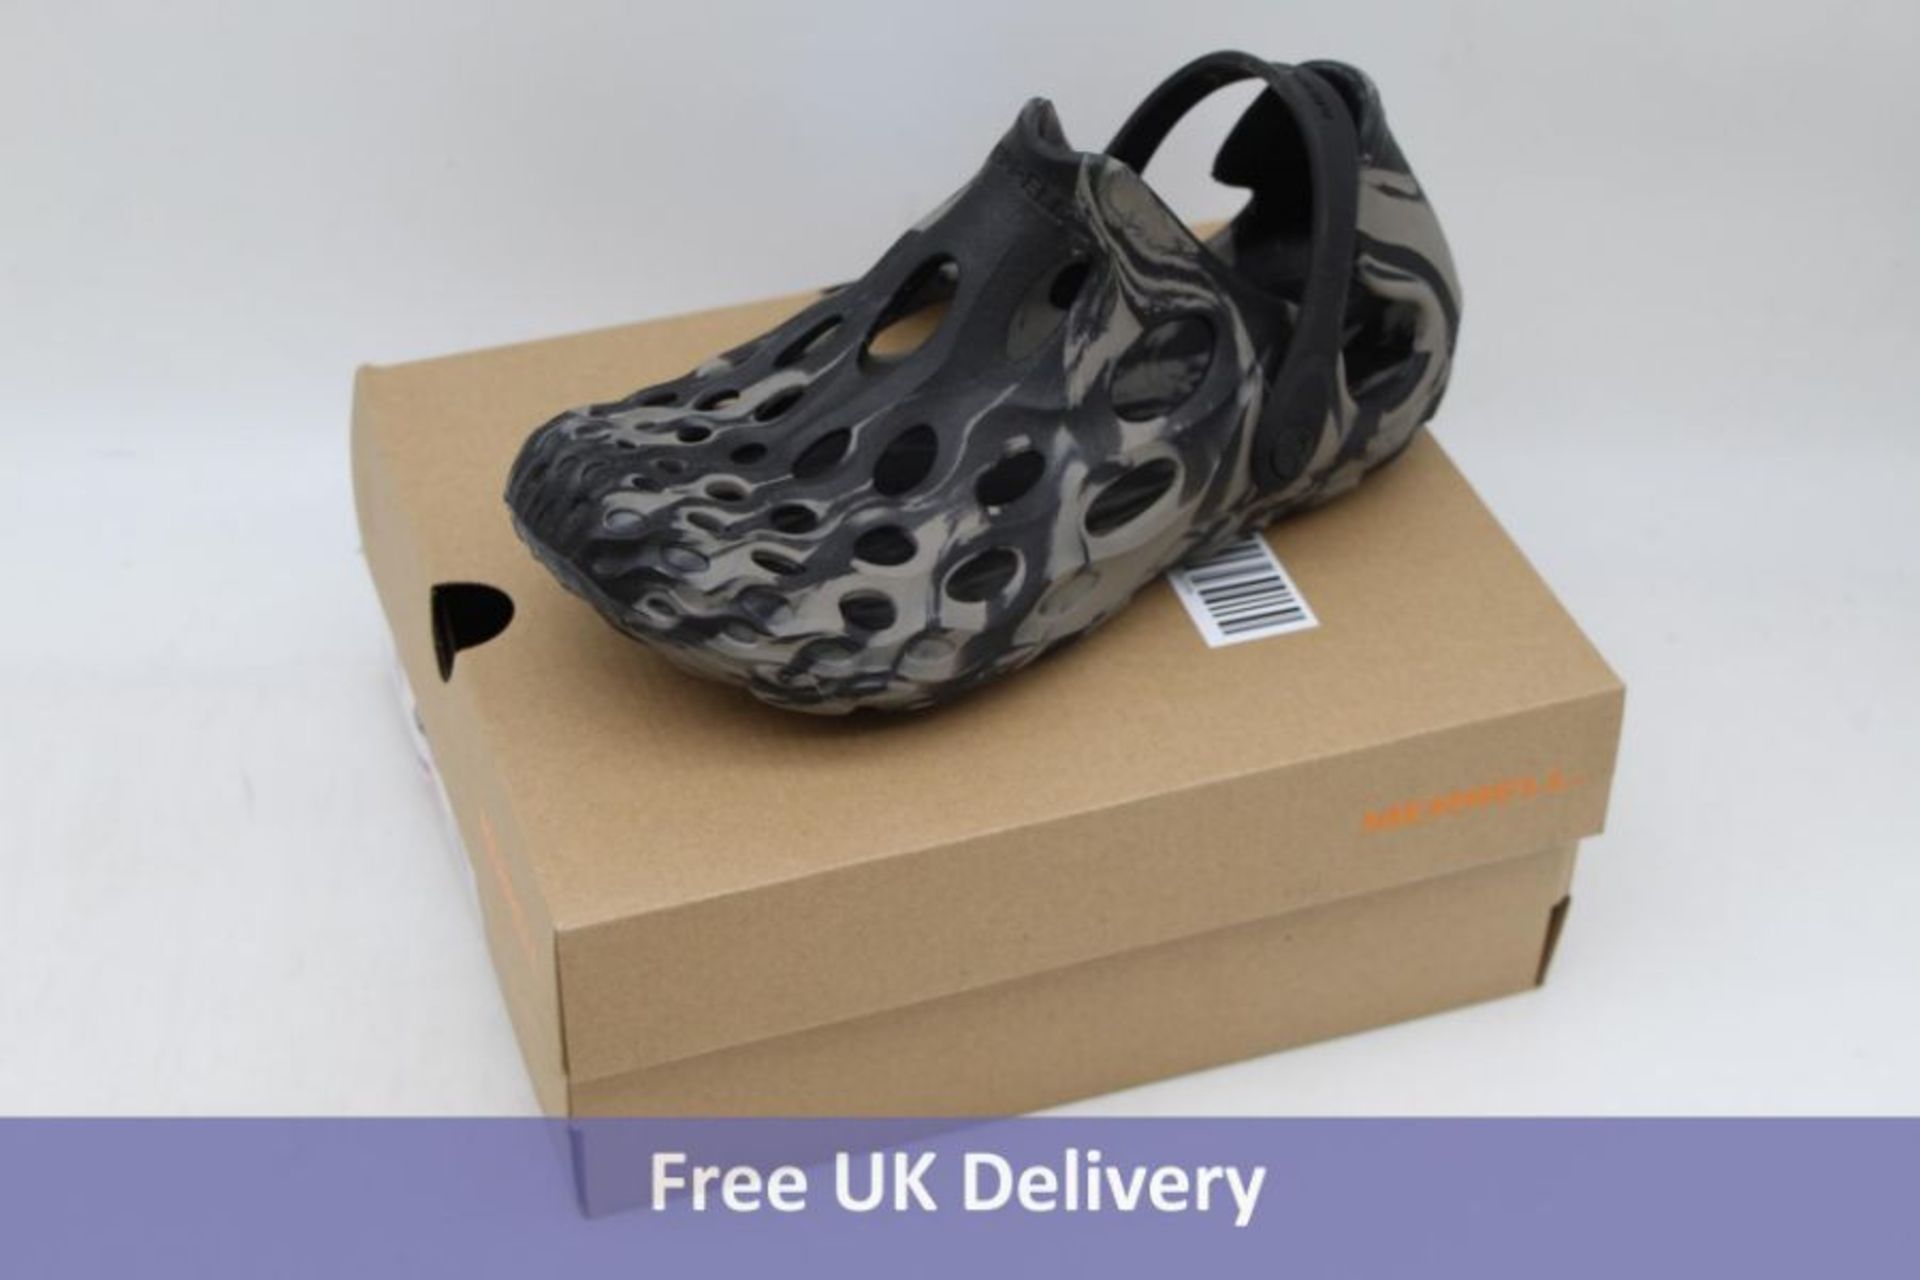 Three Merrell Hydro Moc Women's Sandals, Black/Brindle, 1x UK 4, 2x UK 5 - Image 2 of 3